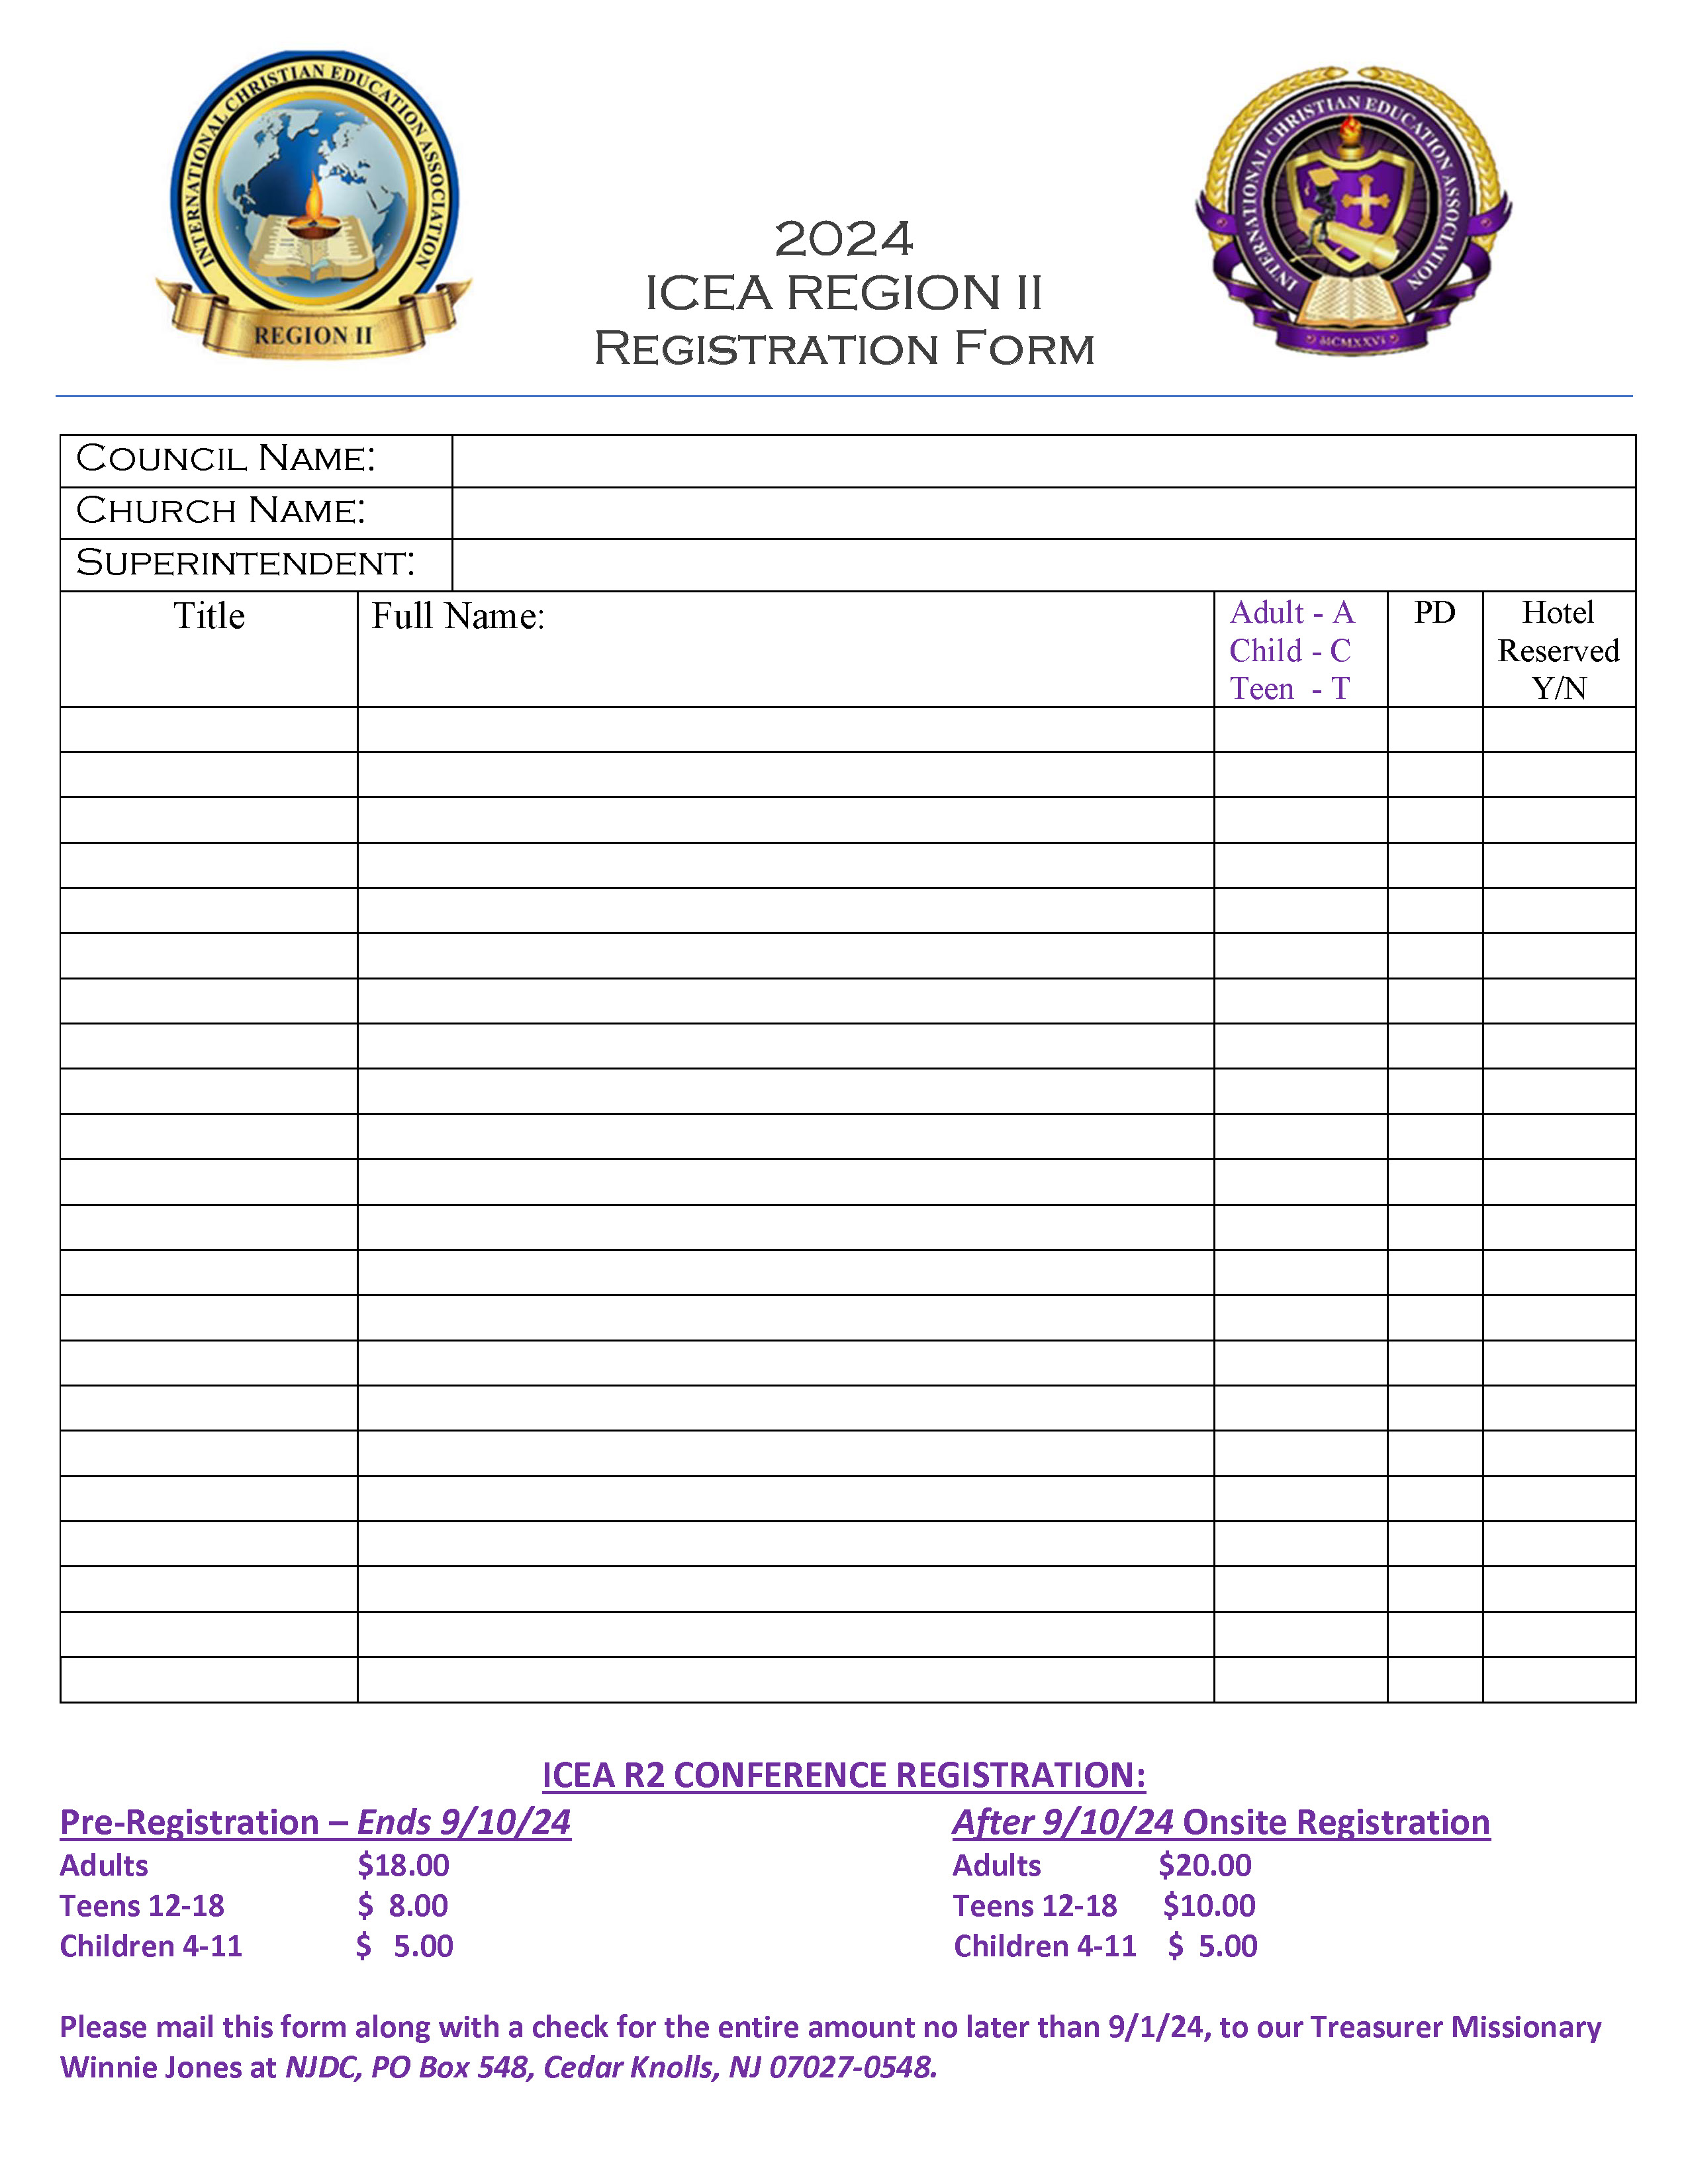 ICEA Registration Form